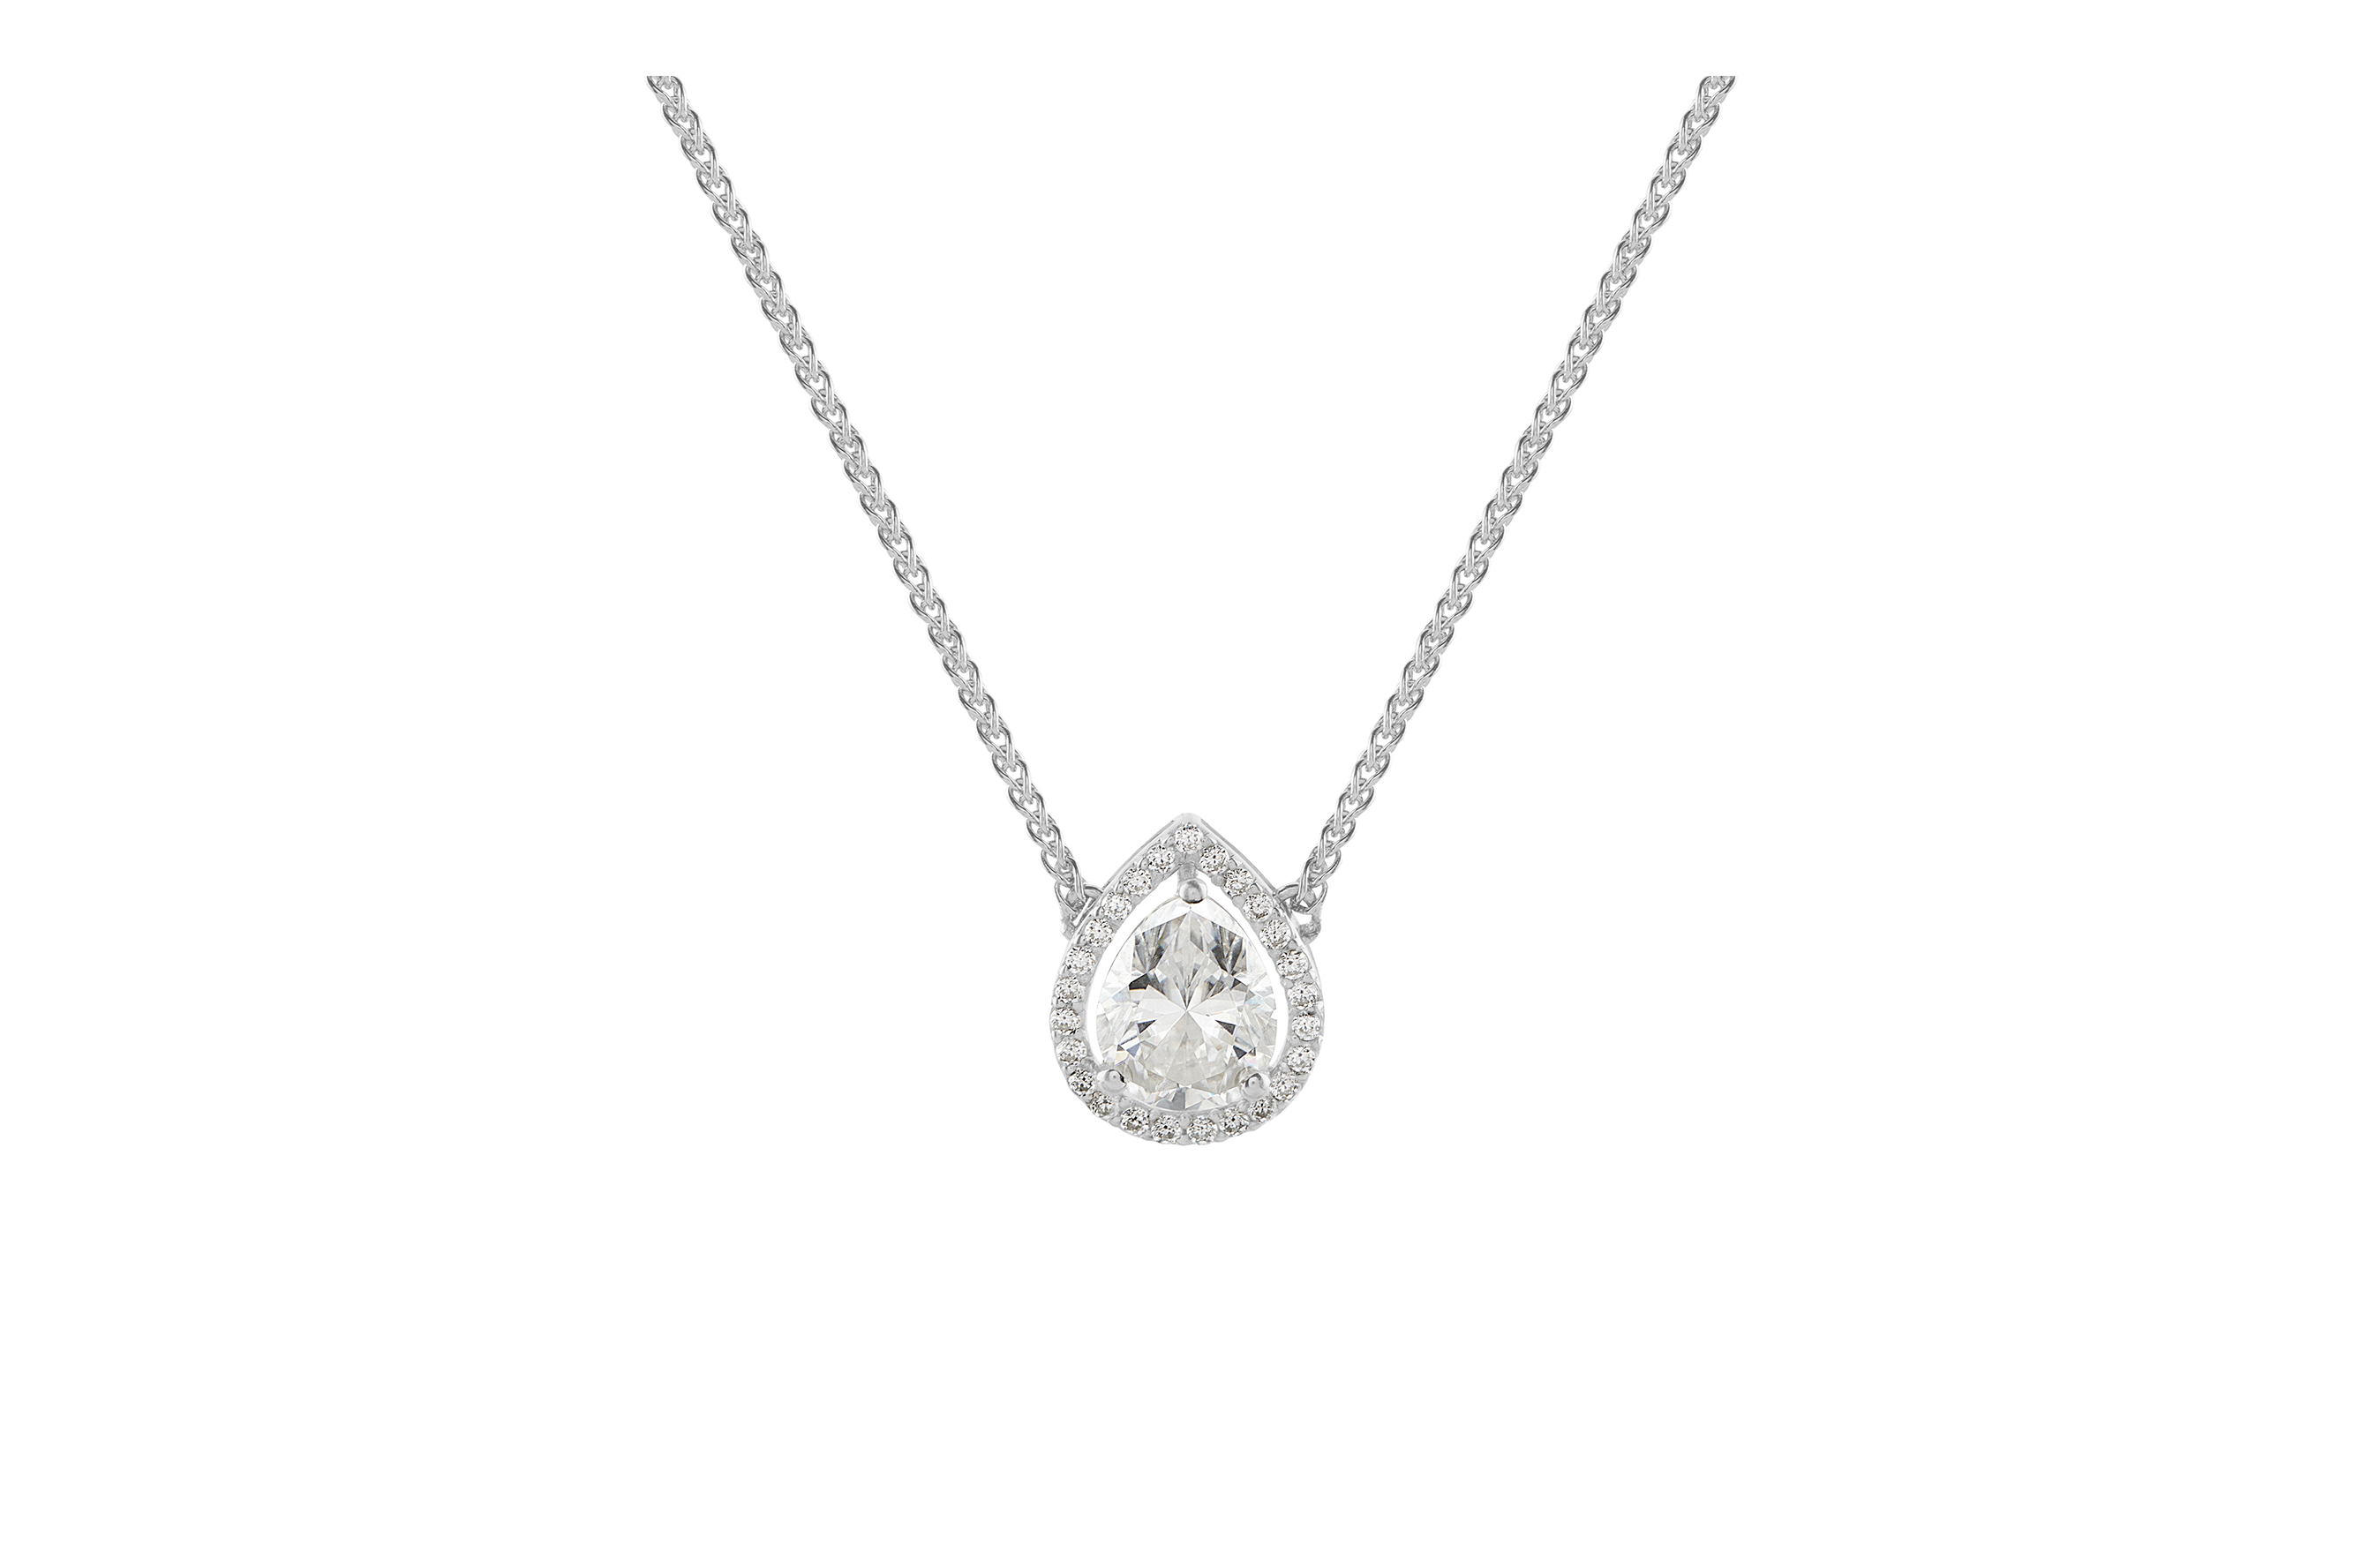 Buy Pearl shaped moissanite stone pendant online price - Anemoii